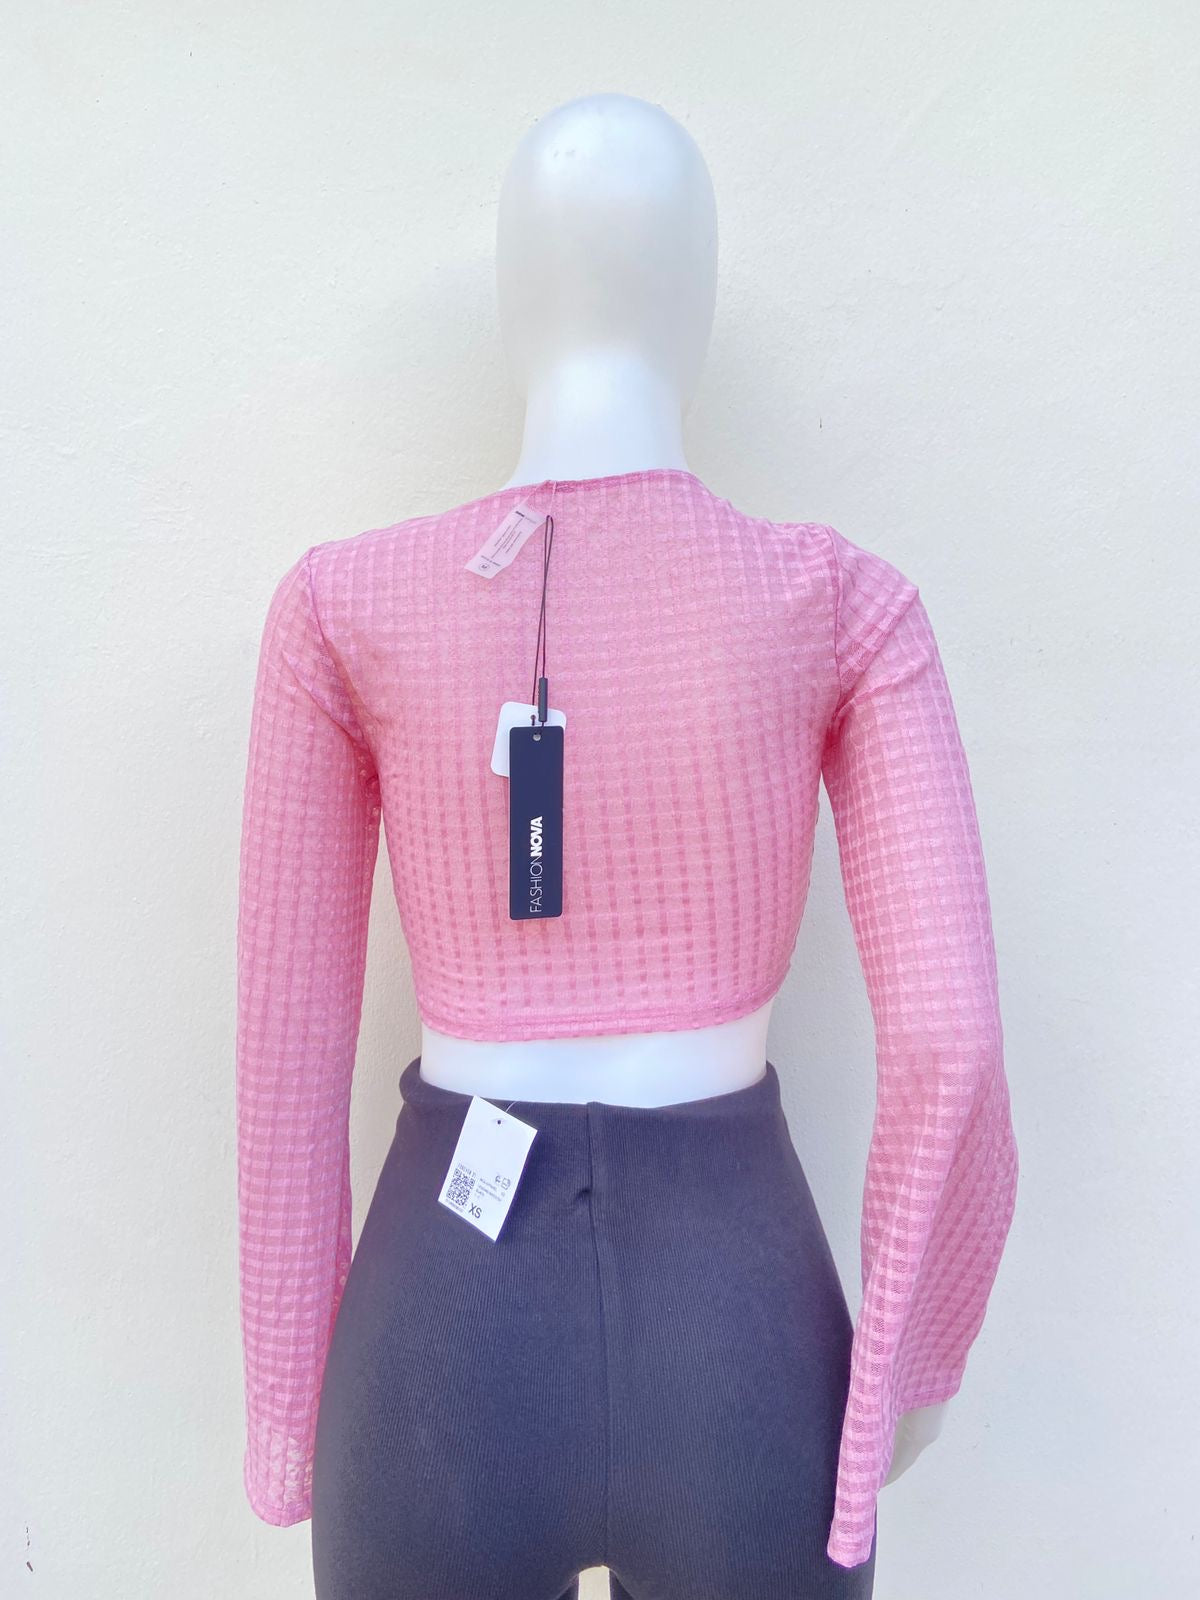 Top Fashion Nova Original, color rosa ,con tiros ajustables y mangas largas, tela transparente